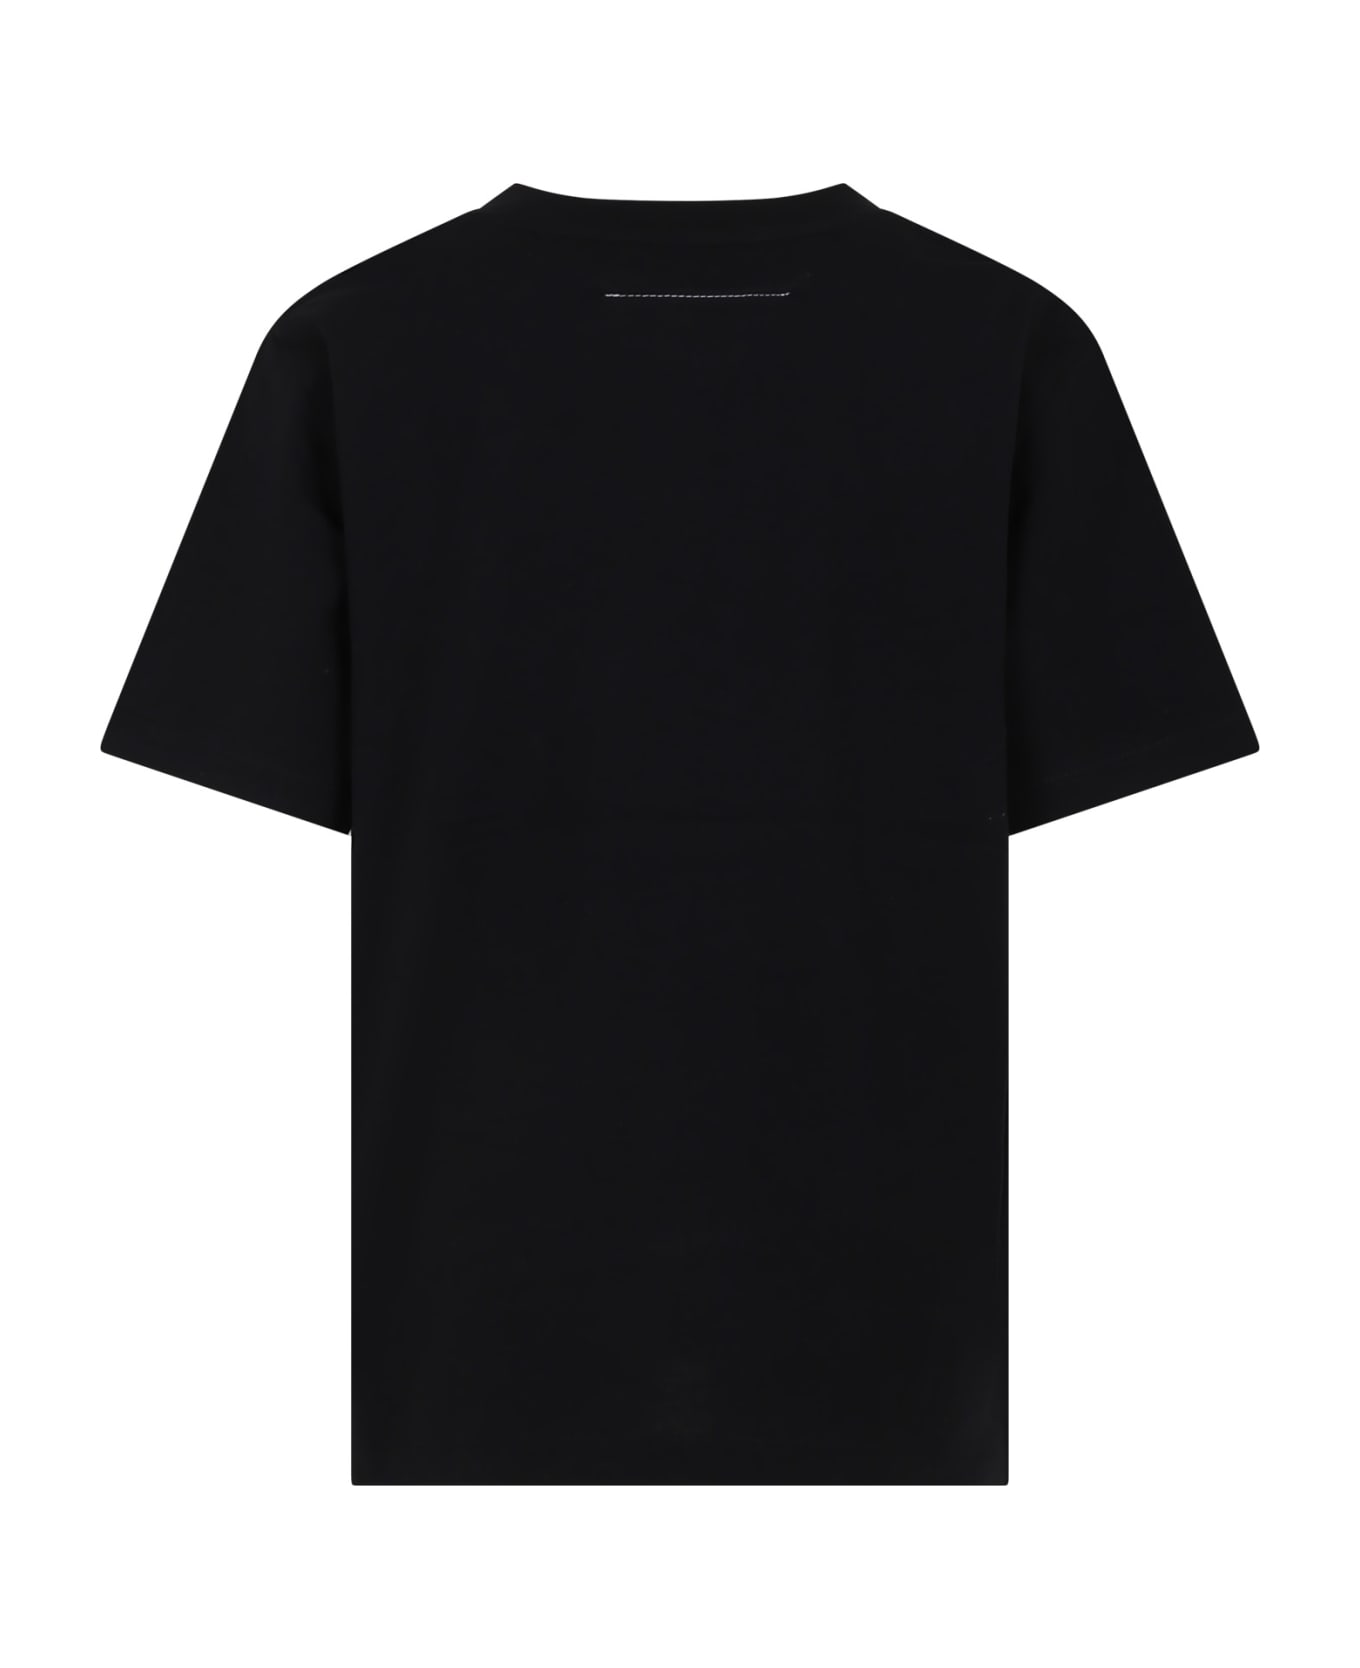 MM6 Maison Margiela Black T-shirt For Kids With Number 6